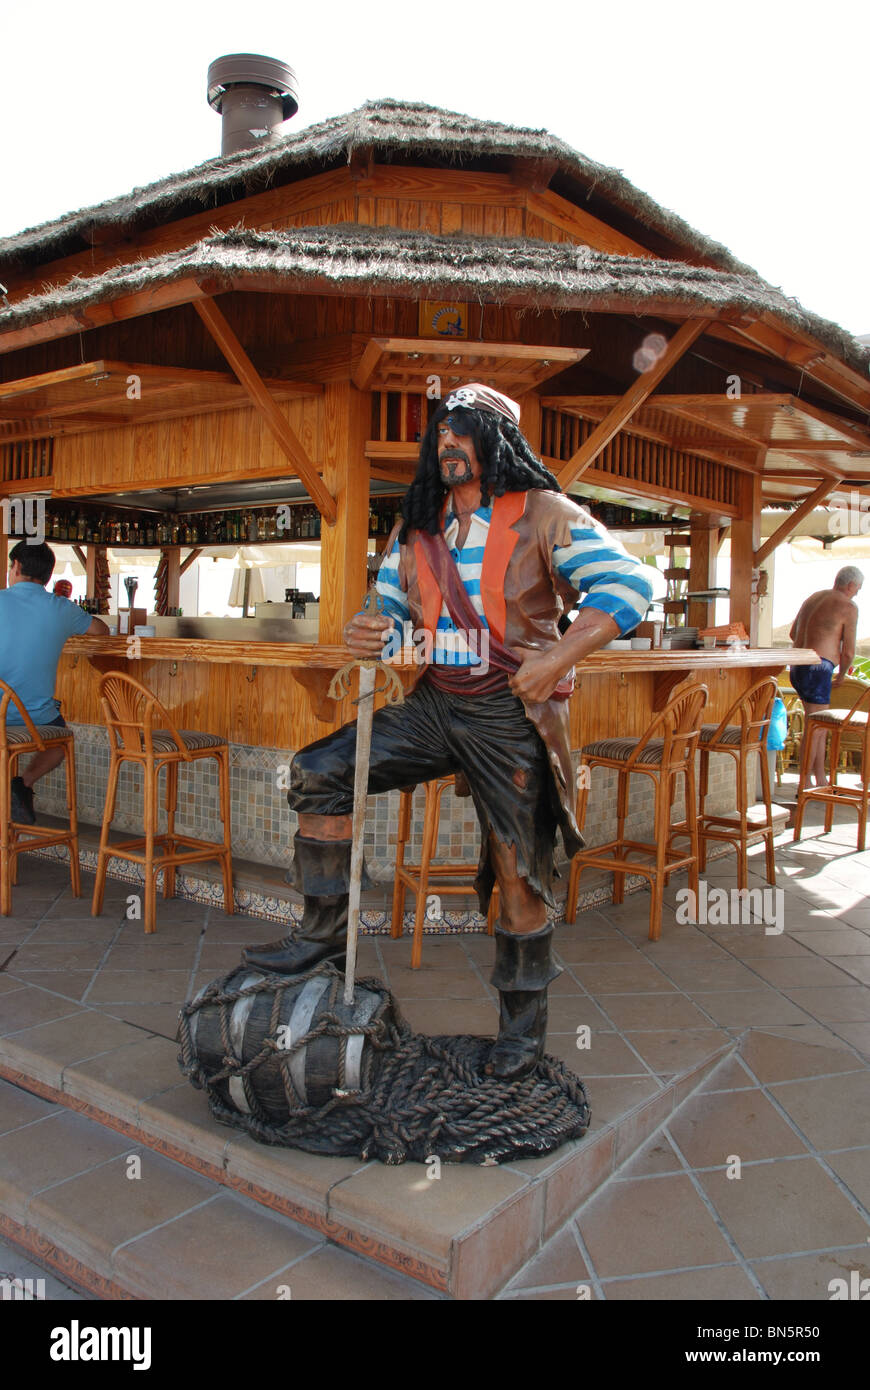 Beach bar (chiringuito) with a pirate statue in the foreground, Torremolinos, Costa del Sol, Malaga Province, Andalucia, Spain. Stock Photo